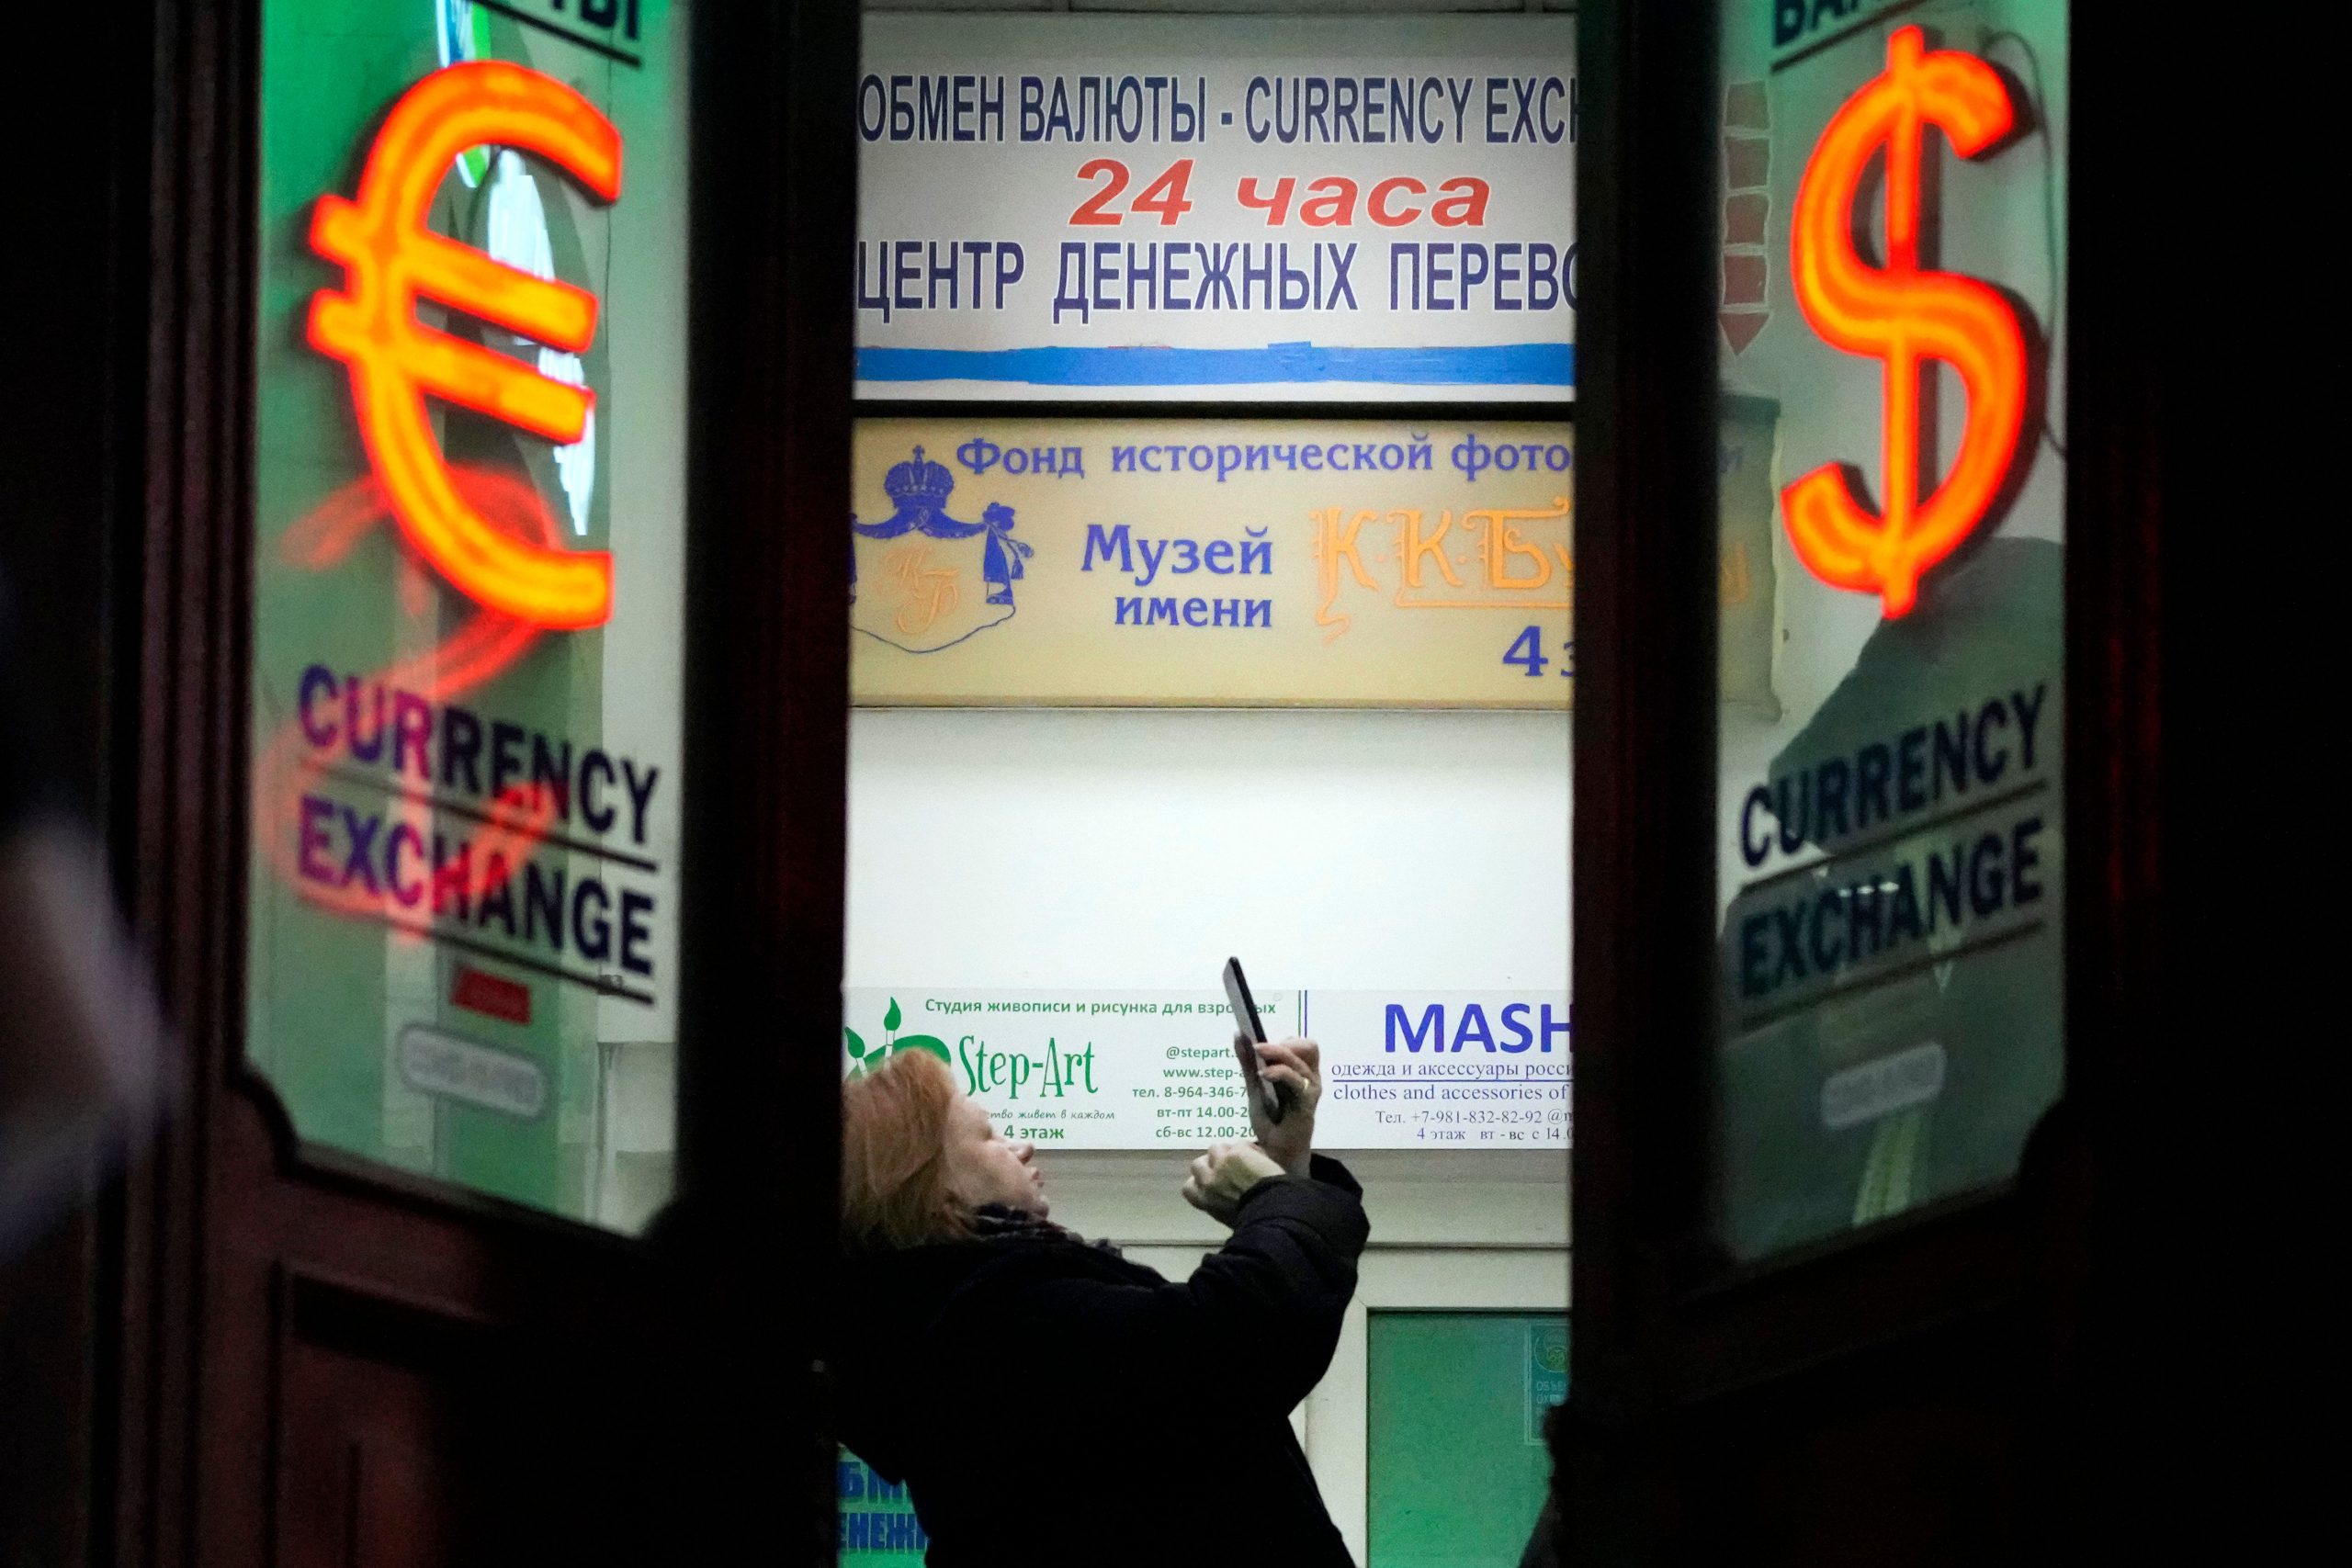 Russian stock market resumes trading after war struggles